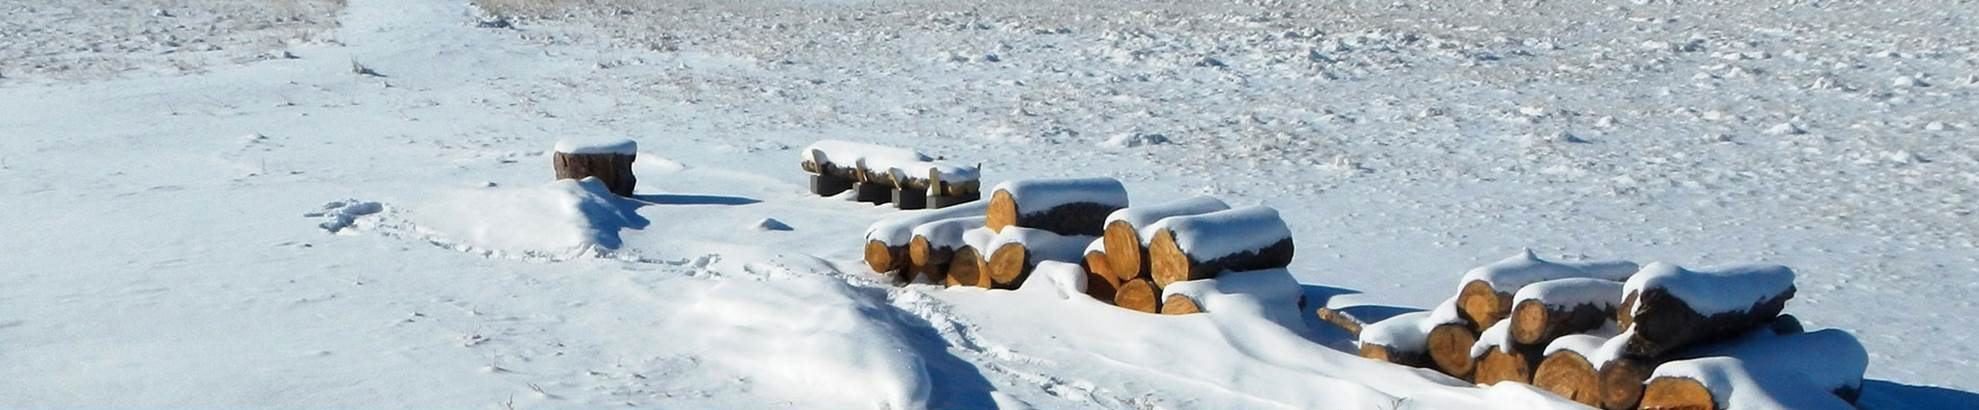 snowy field with logs